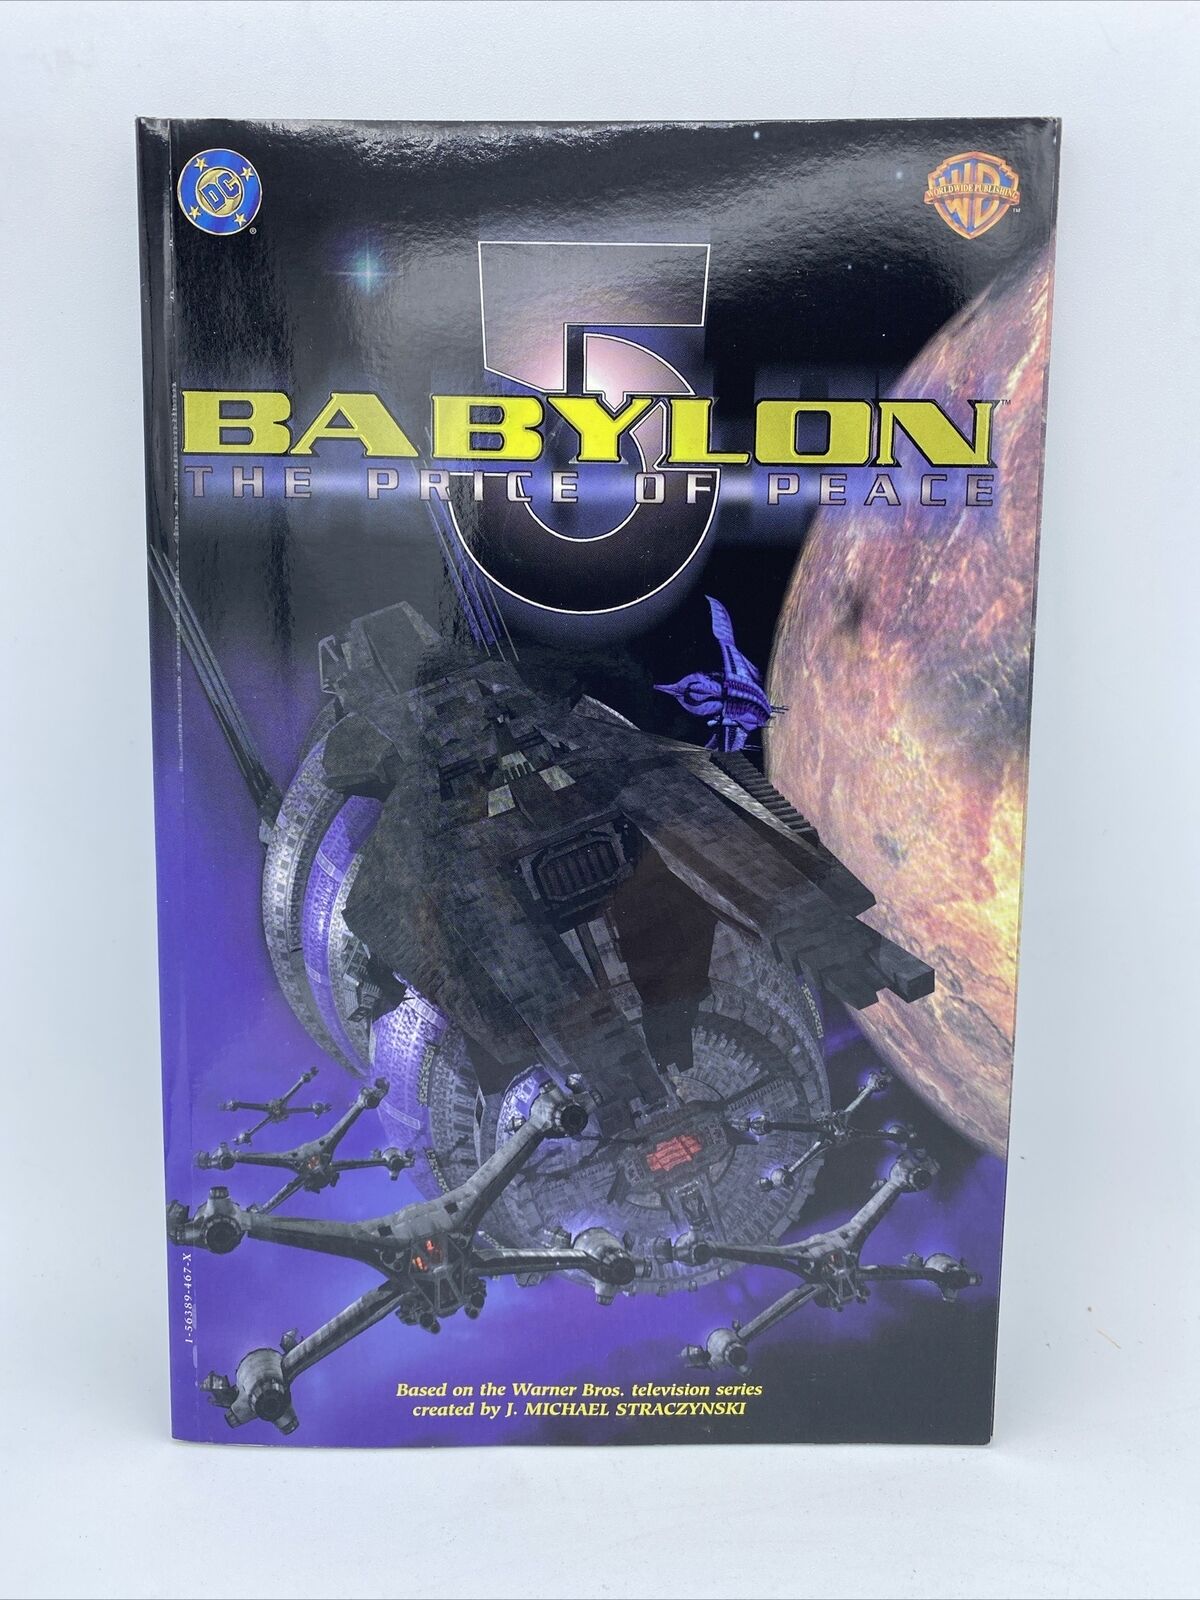 Babylon 5 The Price of Peace Graphic Novel paperback. VF+ - NM